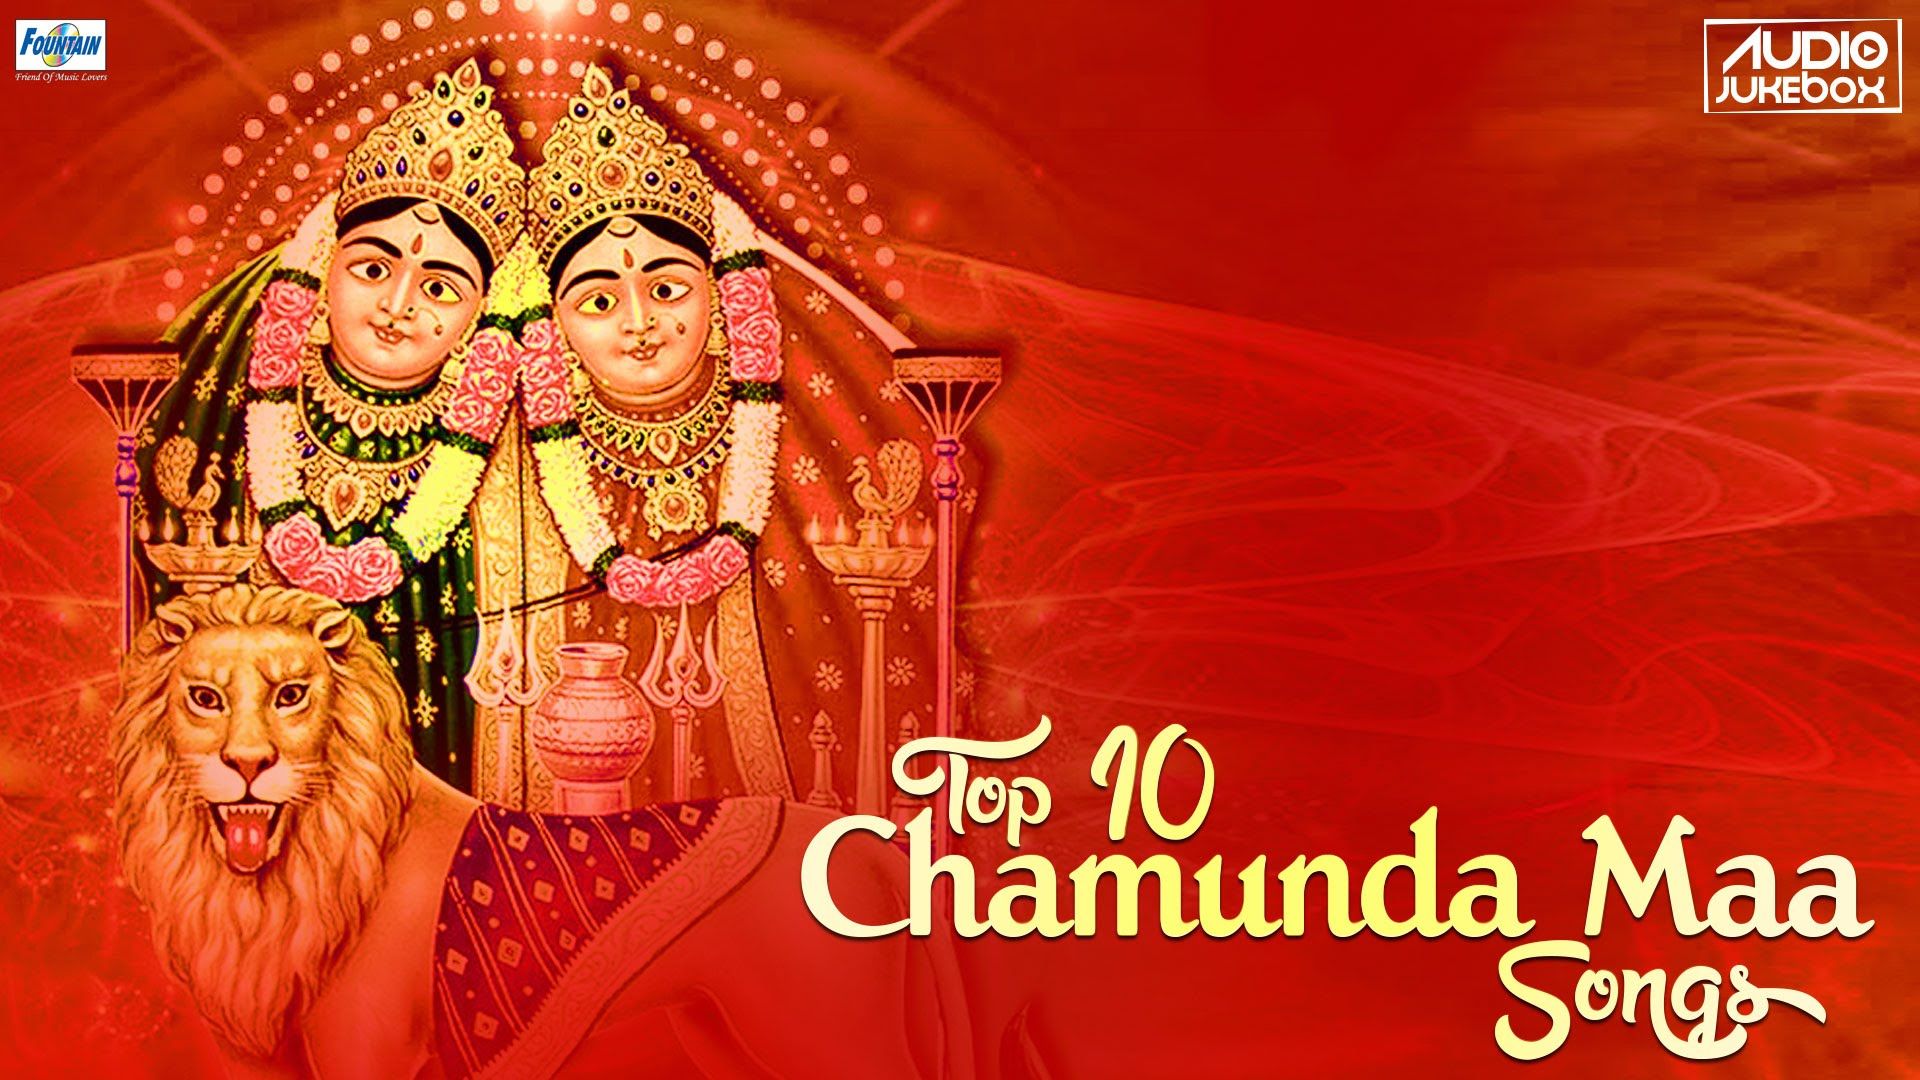 Chamunda Devi  Goddess Images and Wallpapers  Maa Durga Wallpapers